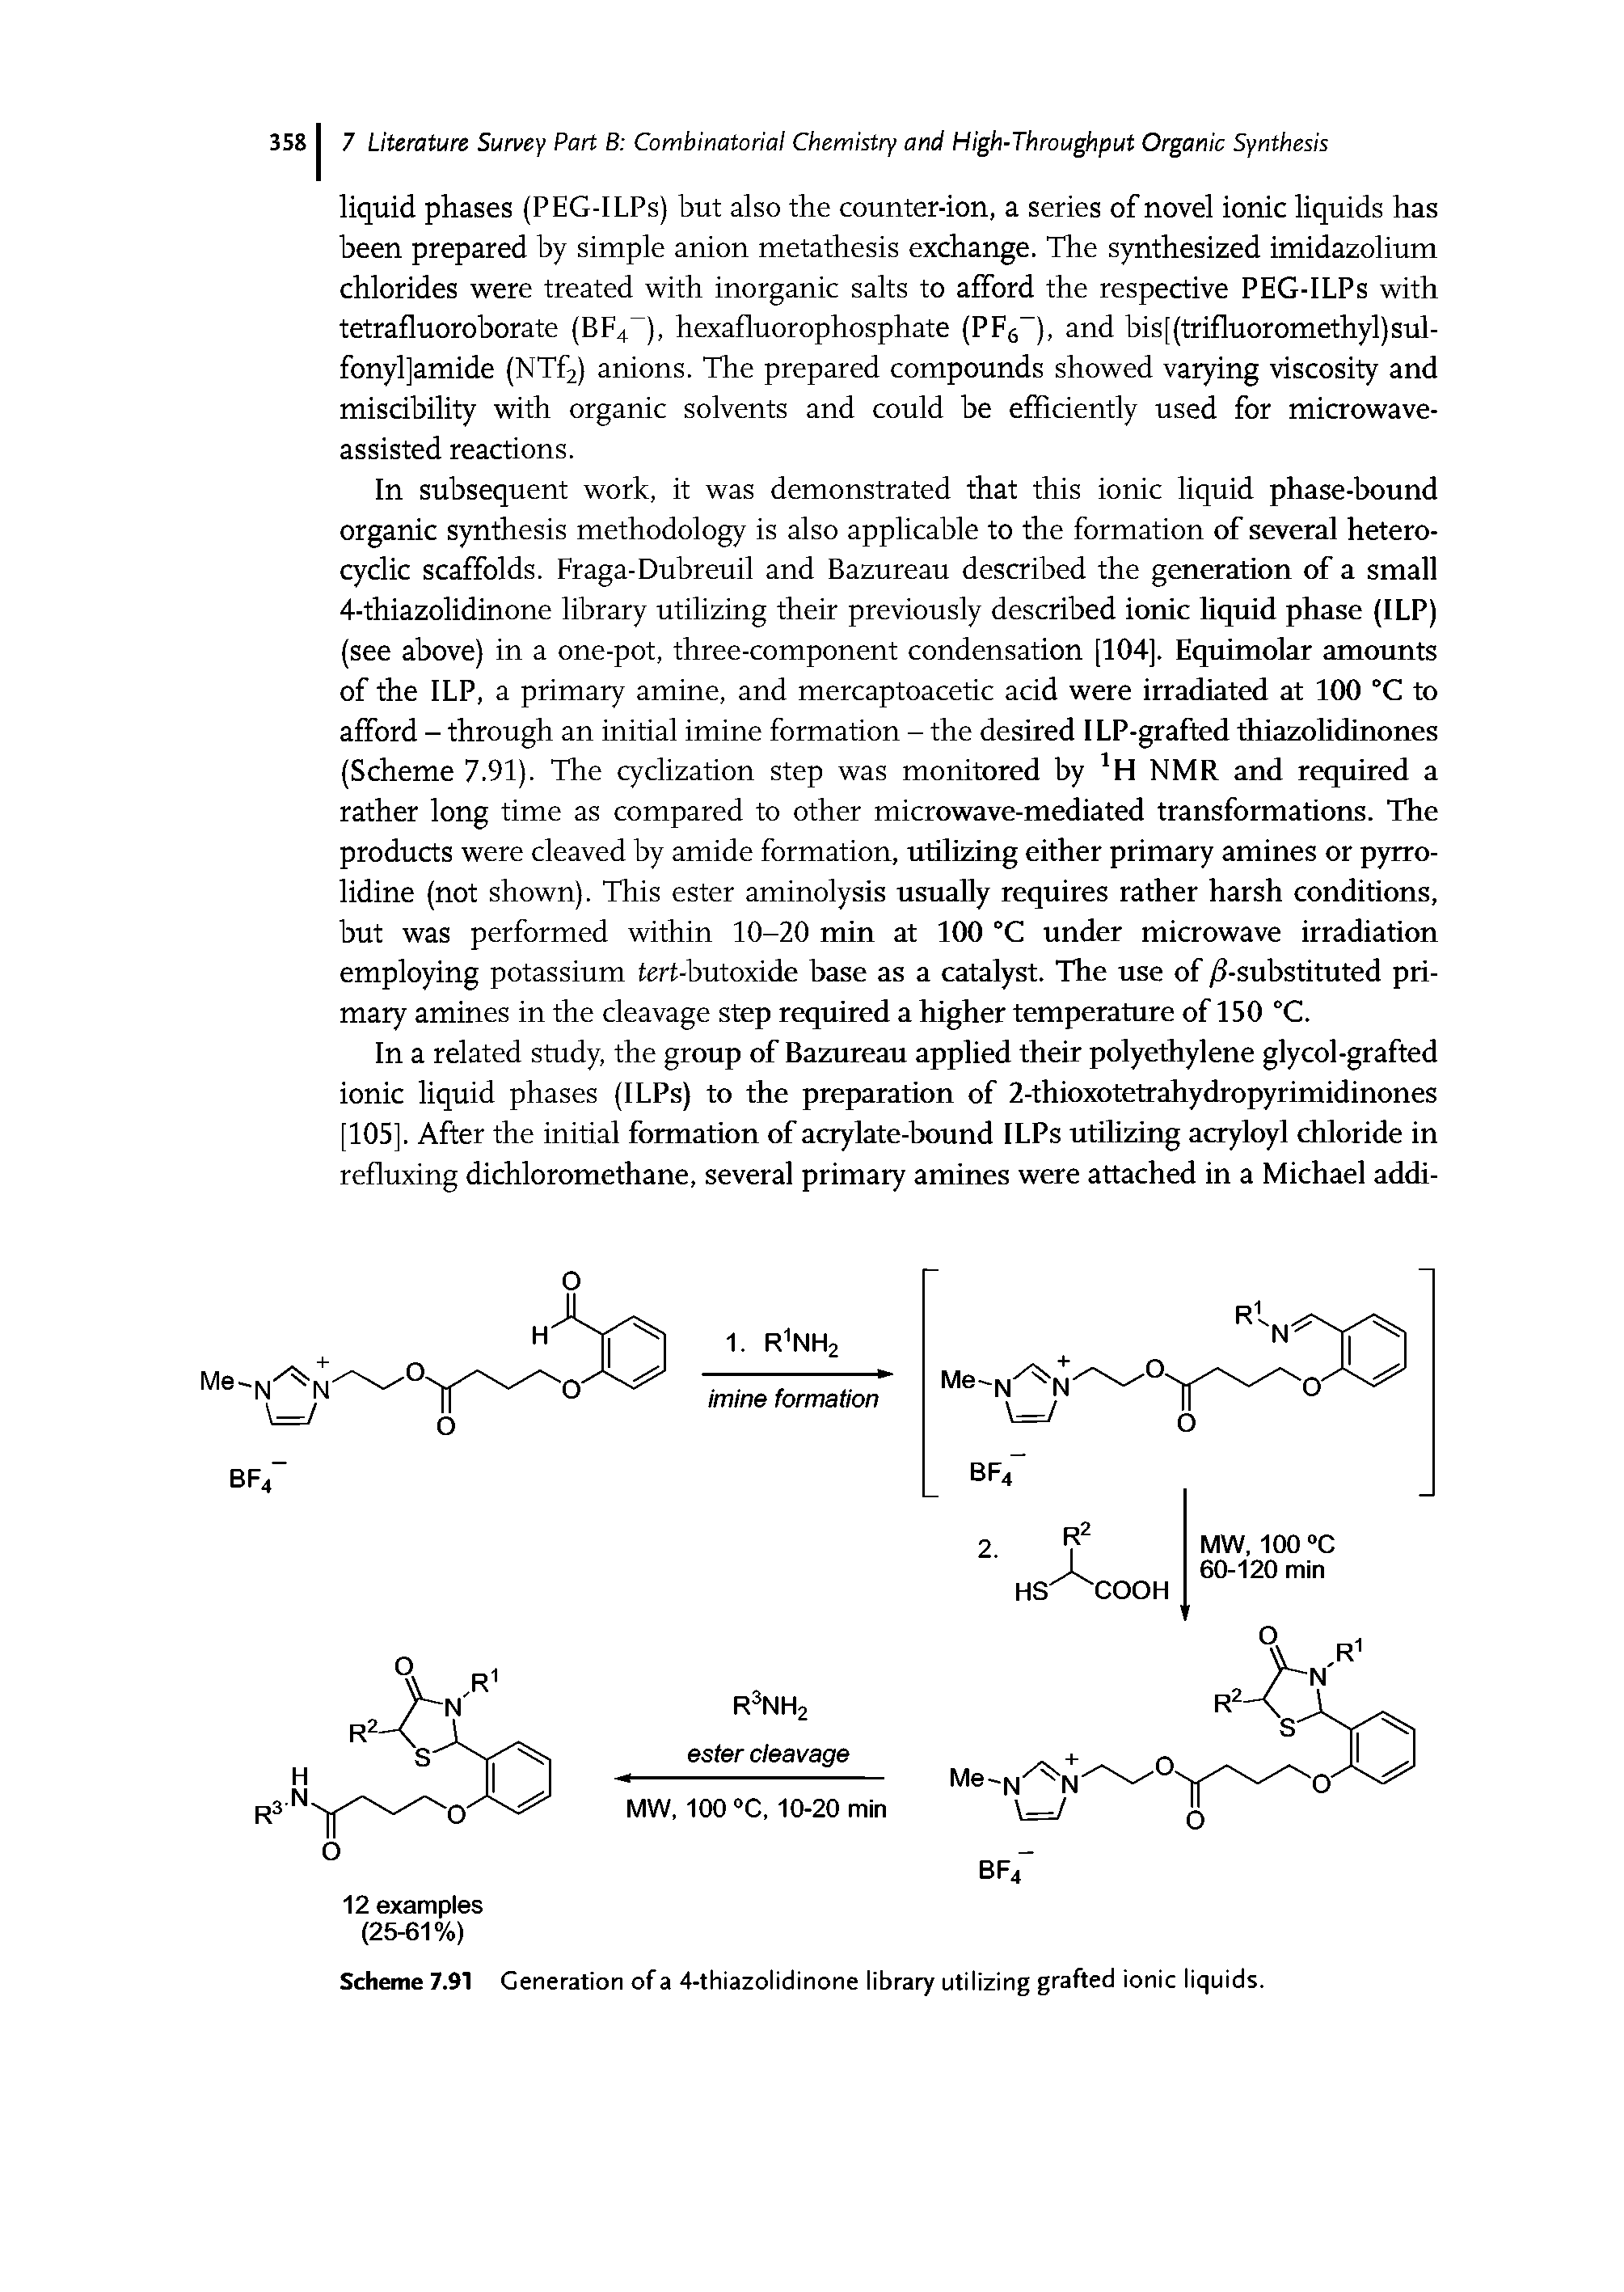 Scheme 7.91 Generation of a 4-thiazolidinone library utilizing grafted ionic liquids.